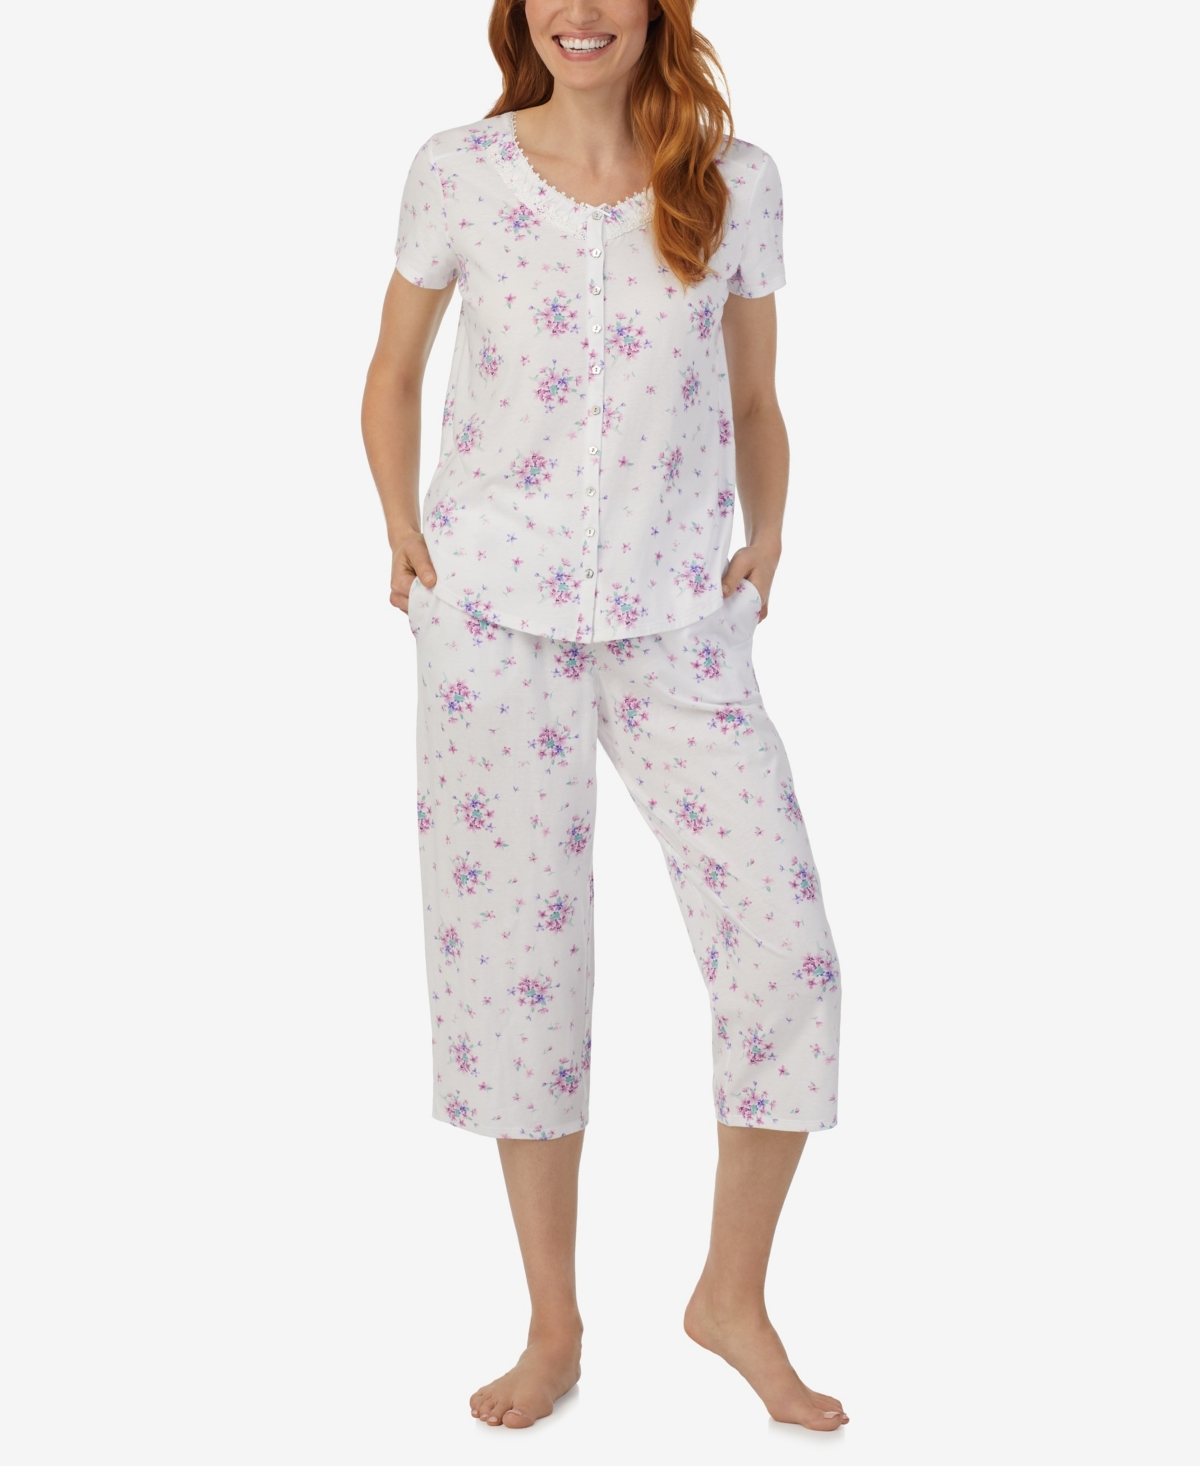 Women's Short Sleeve Top Capri Pants 2-Pc. Pajama Set - Floral Print